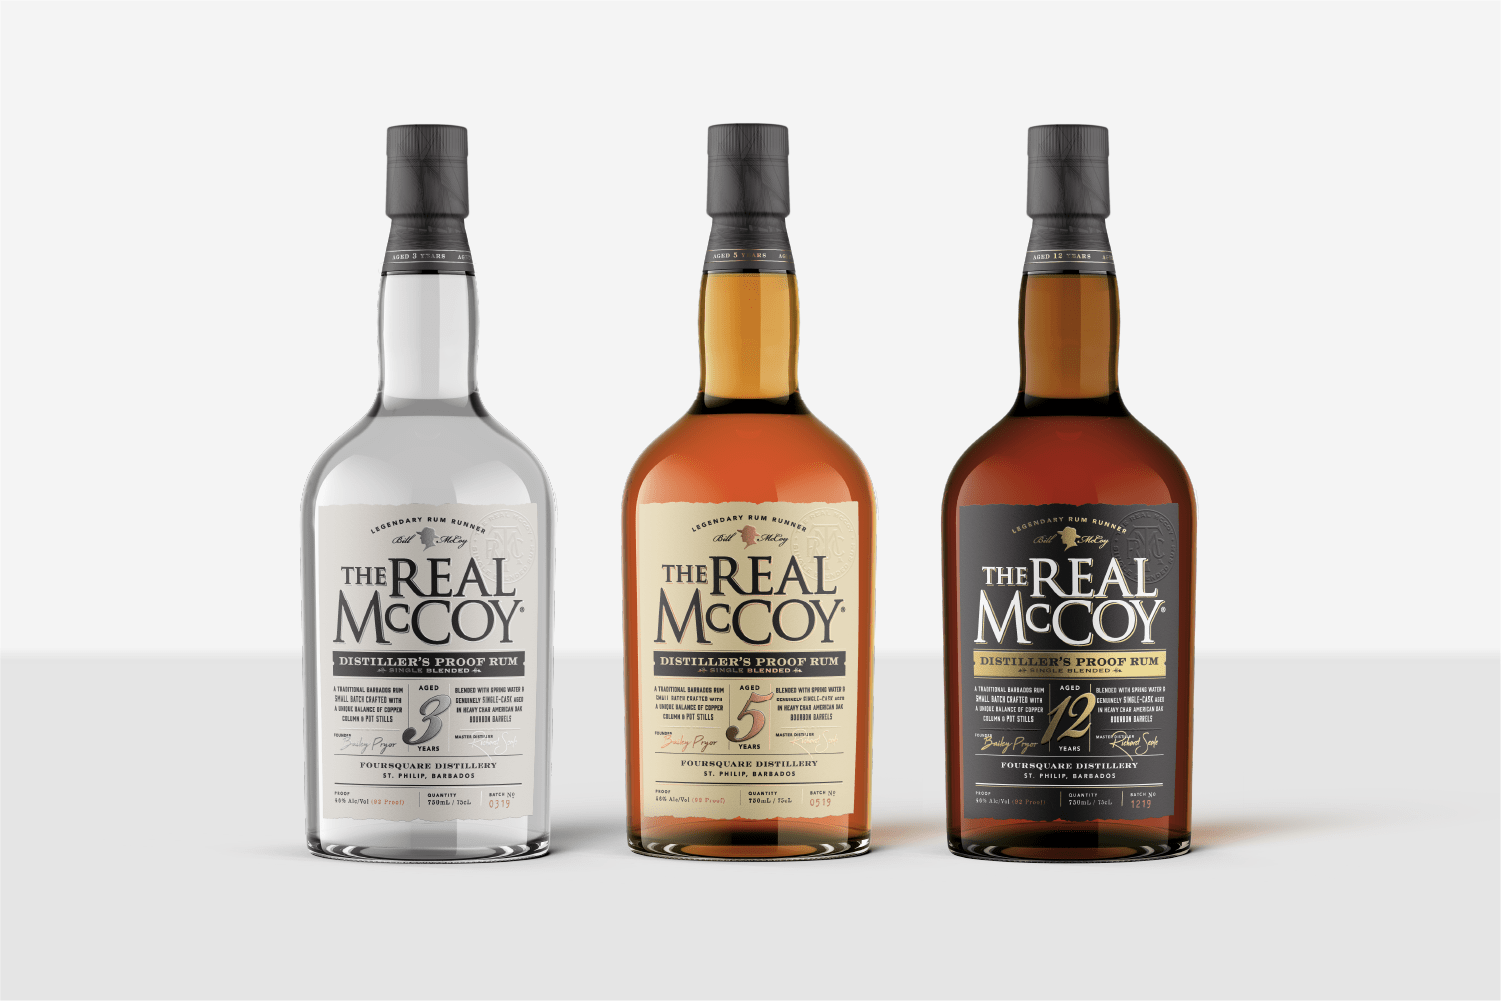 The Real McCoy Single Blended Distiller's Proof Rum, aged 3 years, aged 5 years and aged 12 years